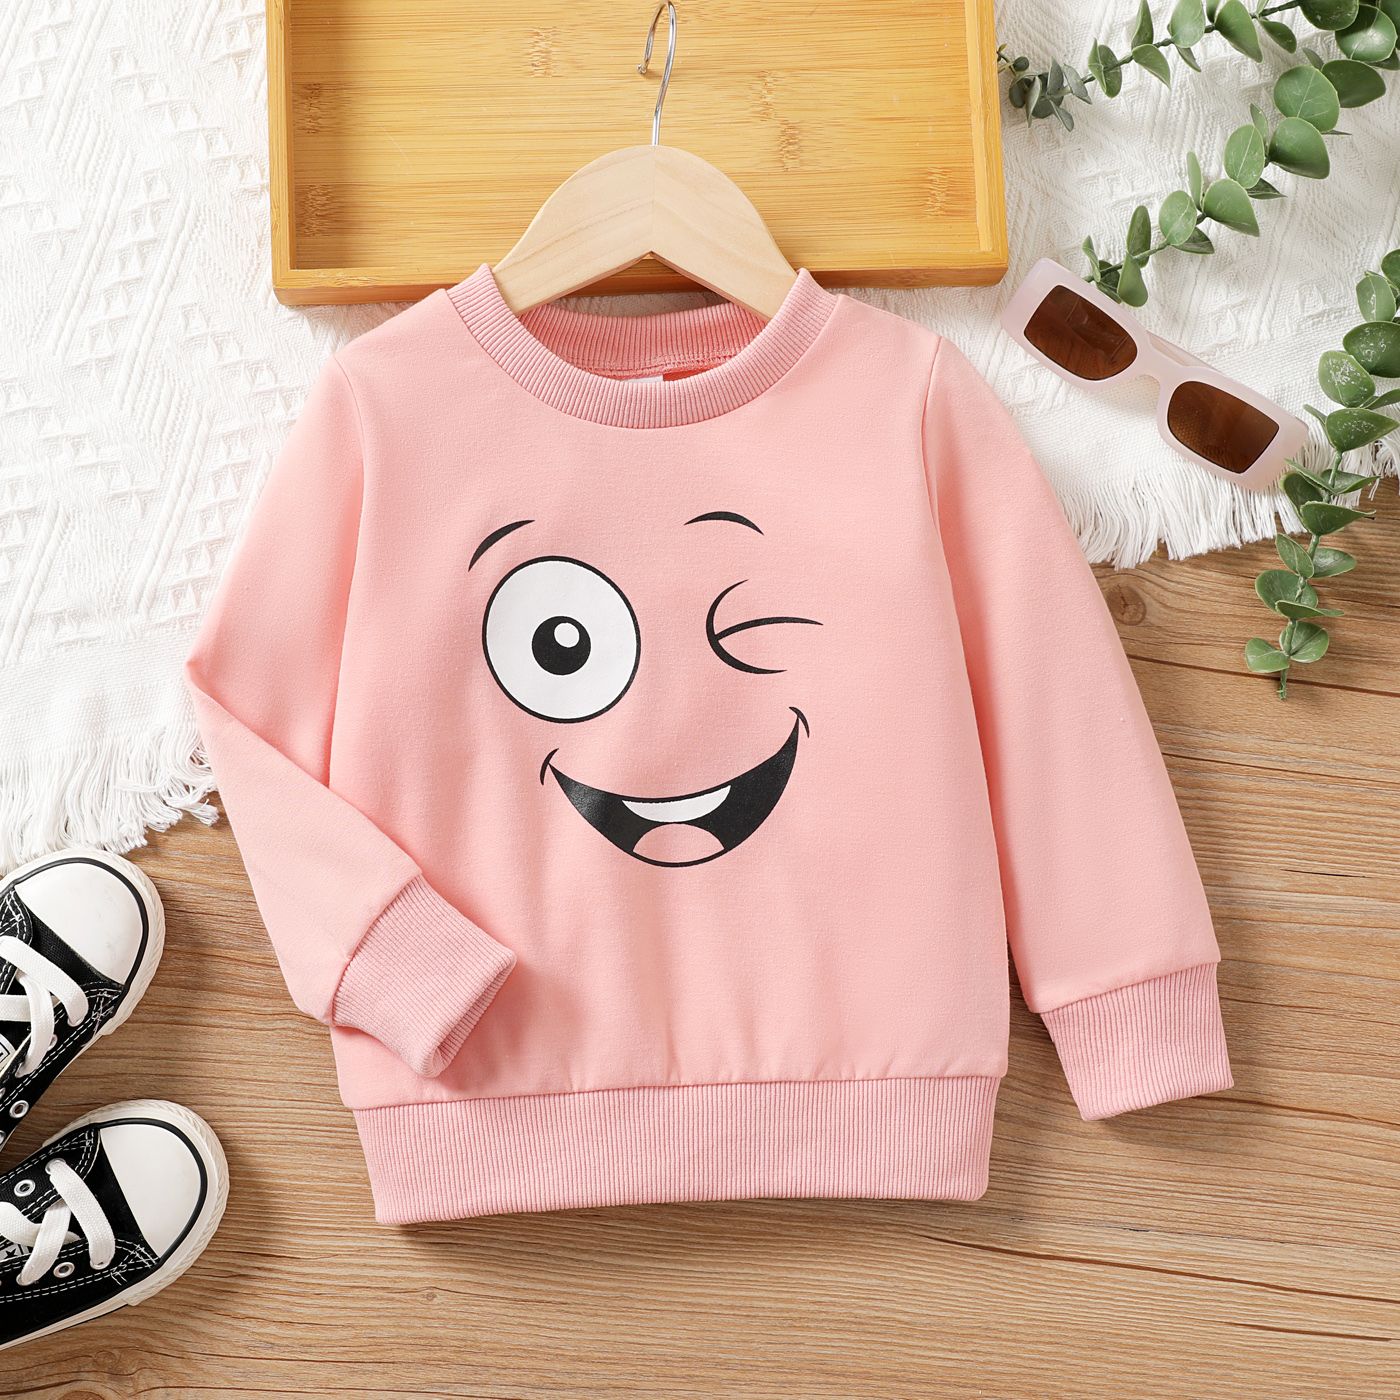 Toddler Girl/Boy Novelty Face Print Pullover Sweatshirt